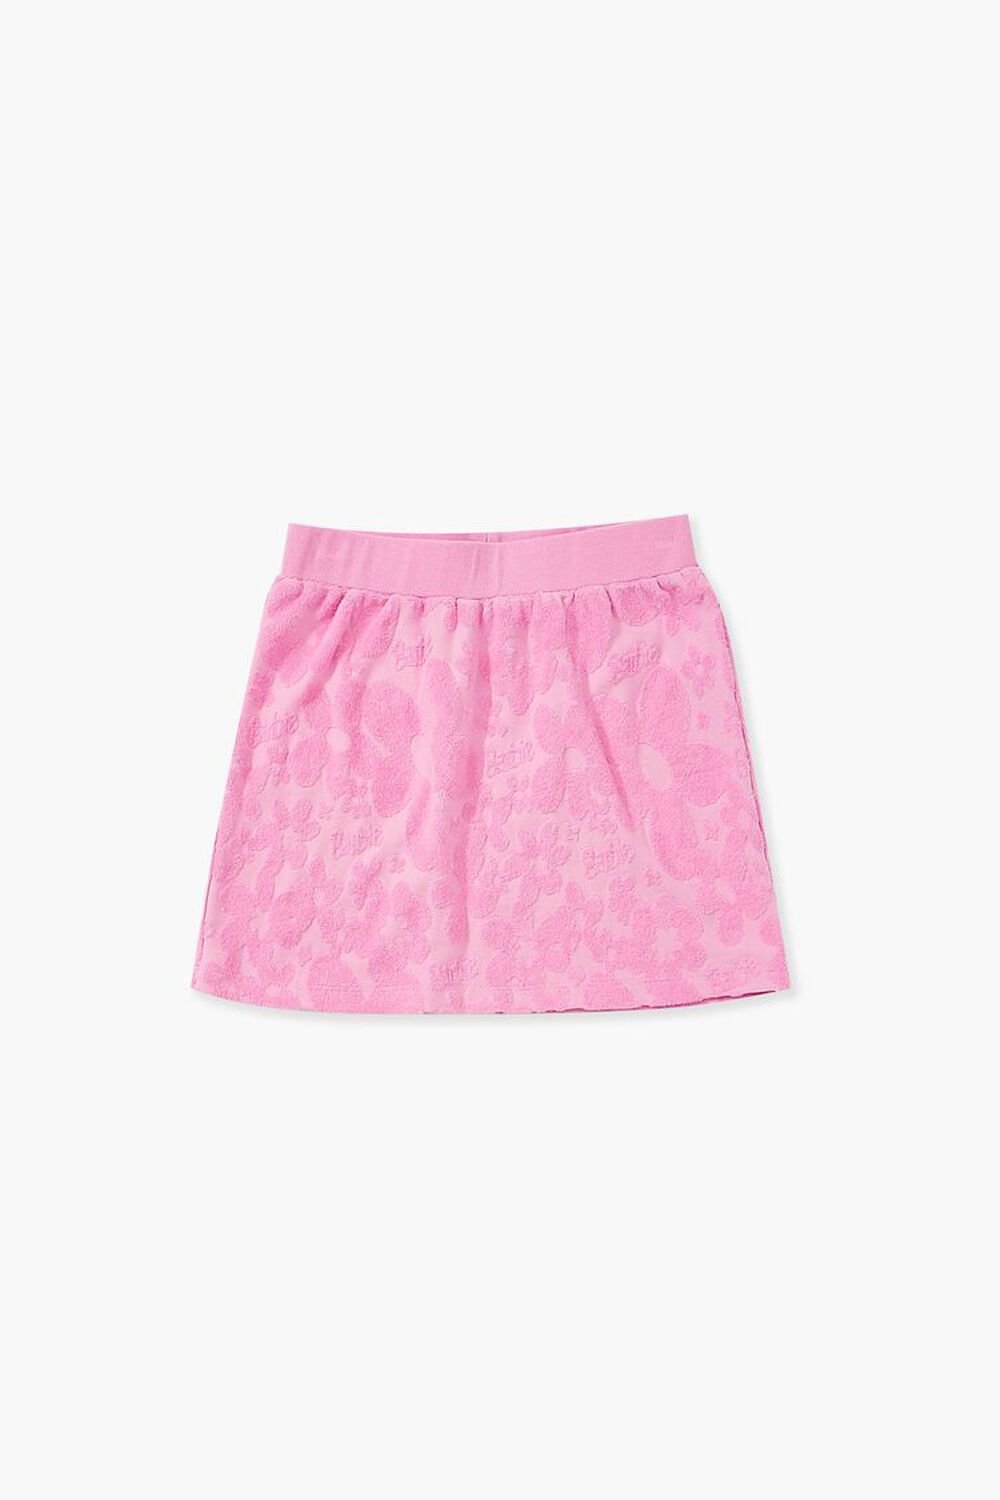 PINK Girls Barbie® Floral Mini Skirt (Kids), image 1